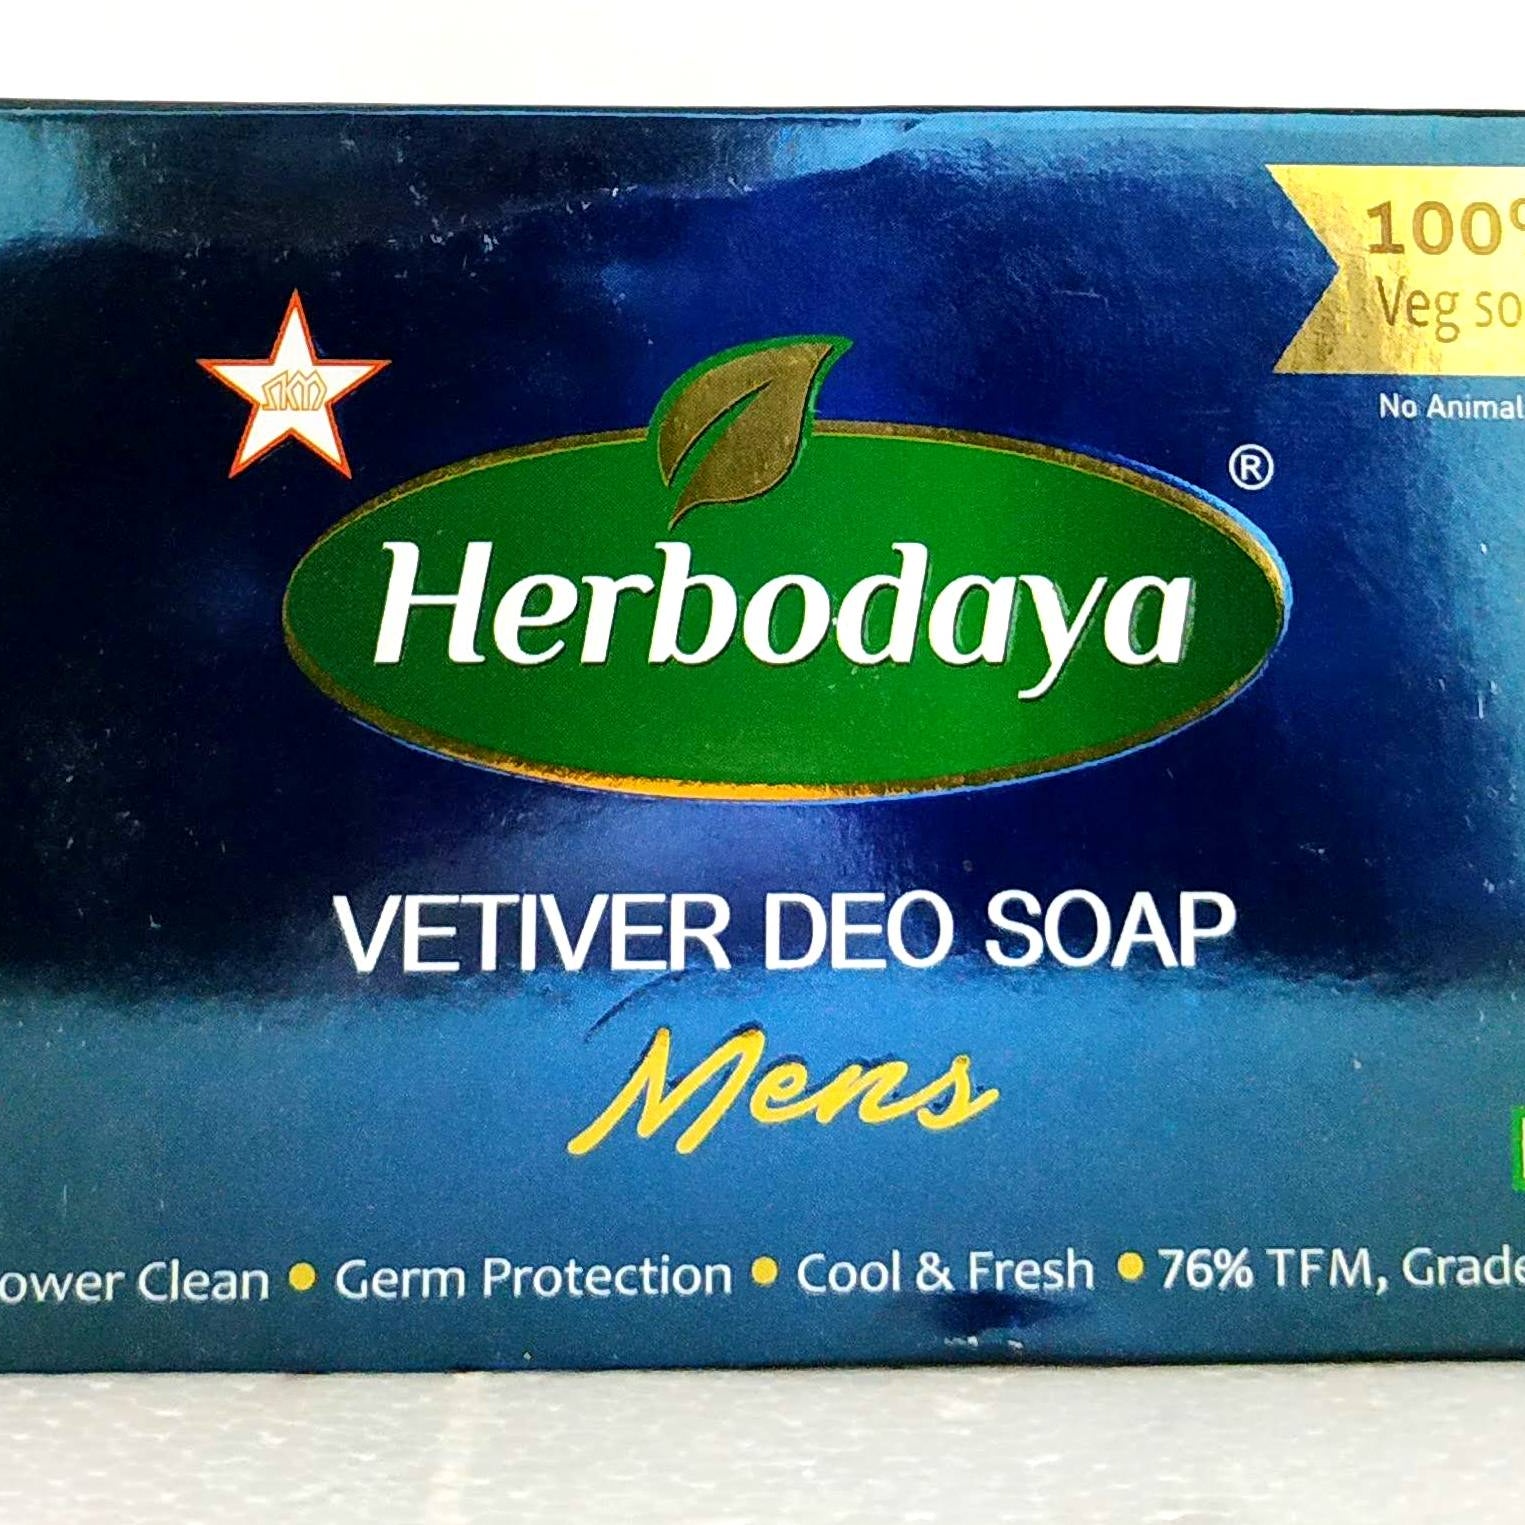 Shop Herbodaya Vettiver Deo Soap 75gm at price 36.00 from Herbodaya Online - Ayush Care